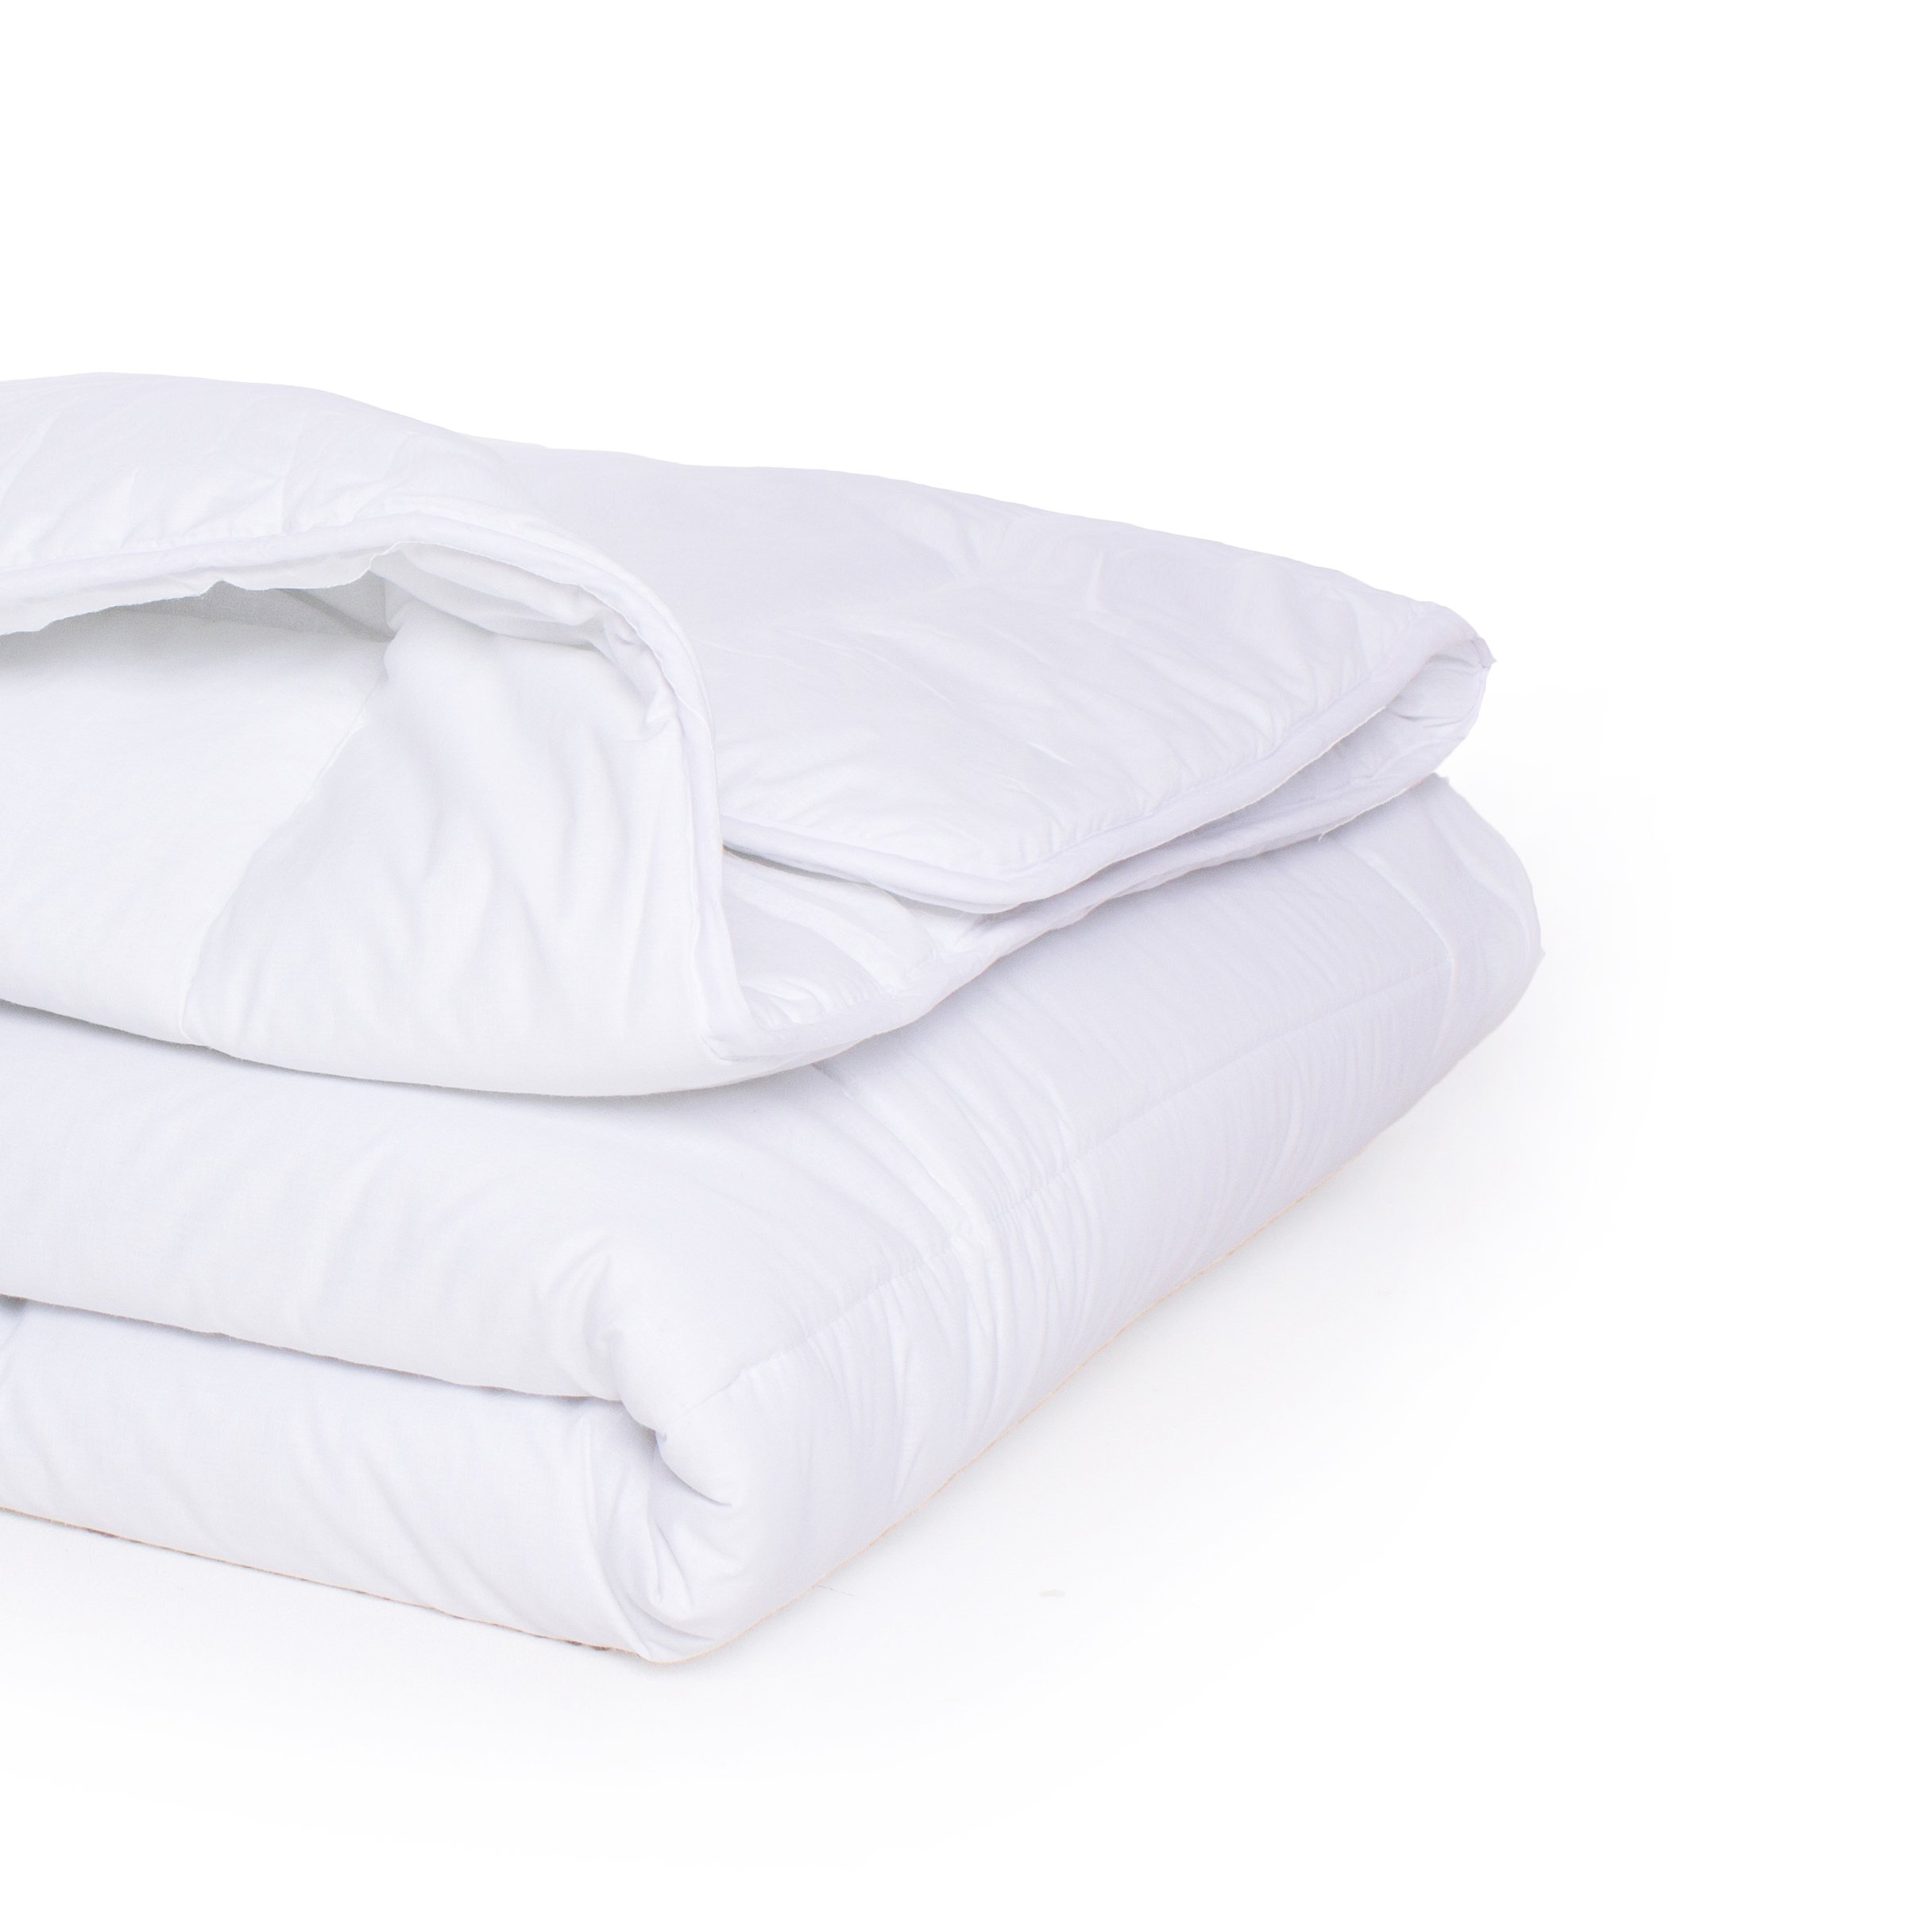 Одеяло шерстяное MirSon Bianco Экстра Премиум №0787, зимнее, 140x205 см, белое - фото 4